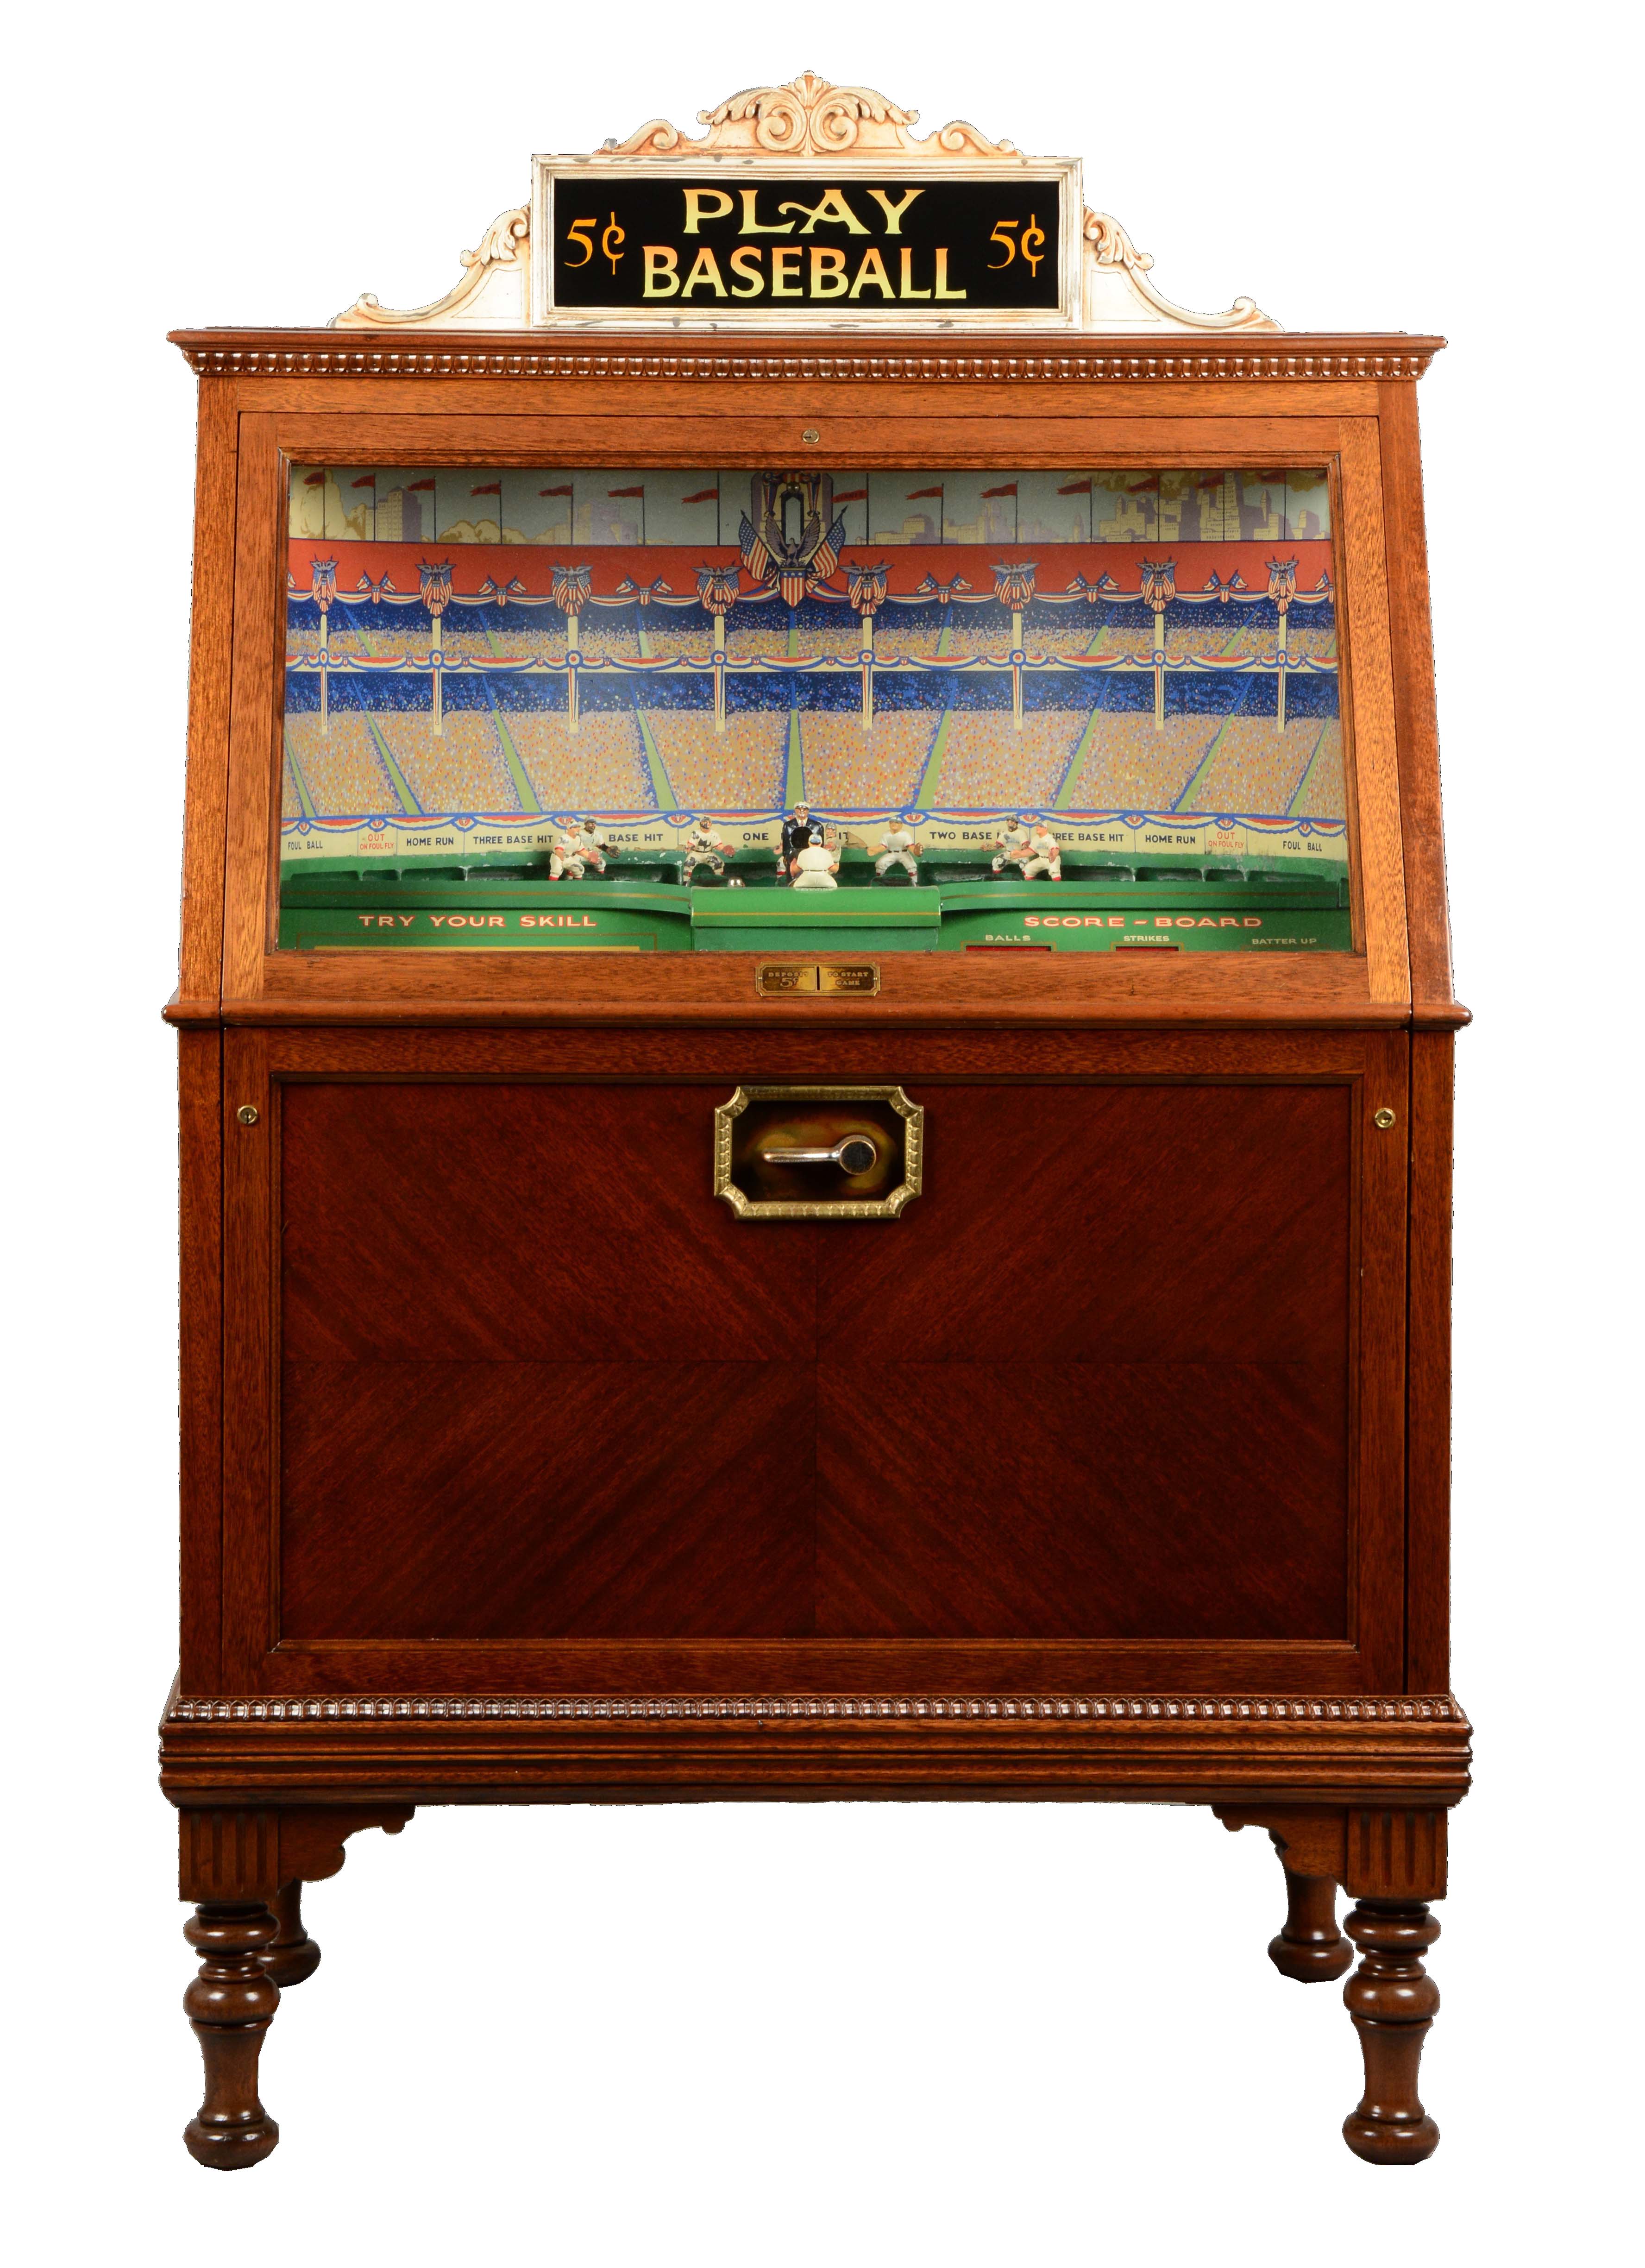 5¢ Amusement Machine Co. All American Baseball Arcade Machine, estimated at $70,000-90,000.